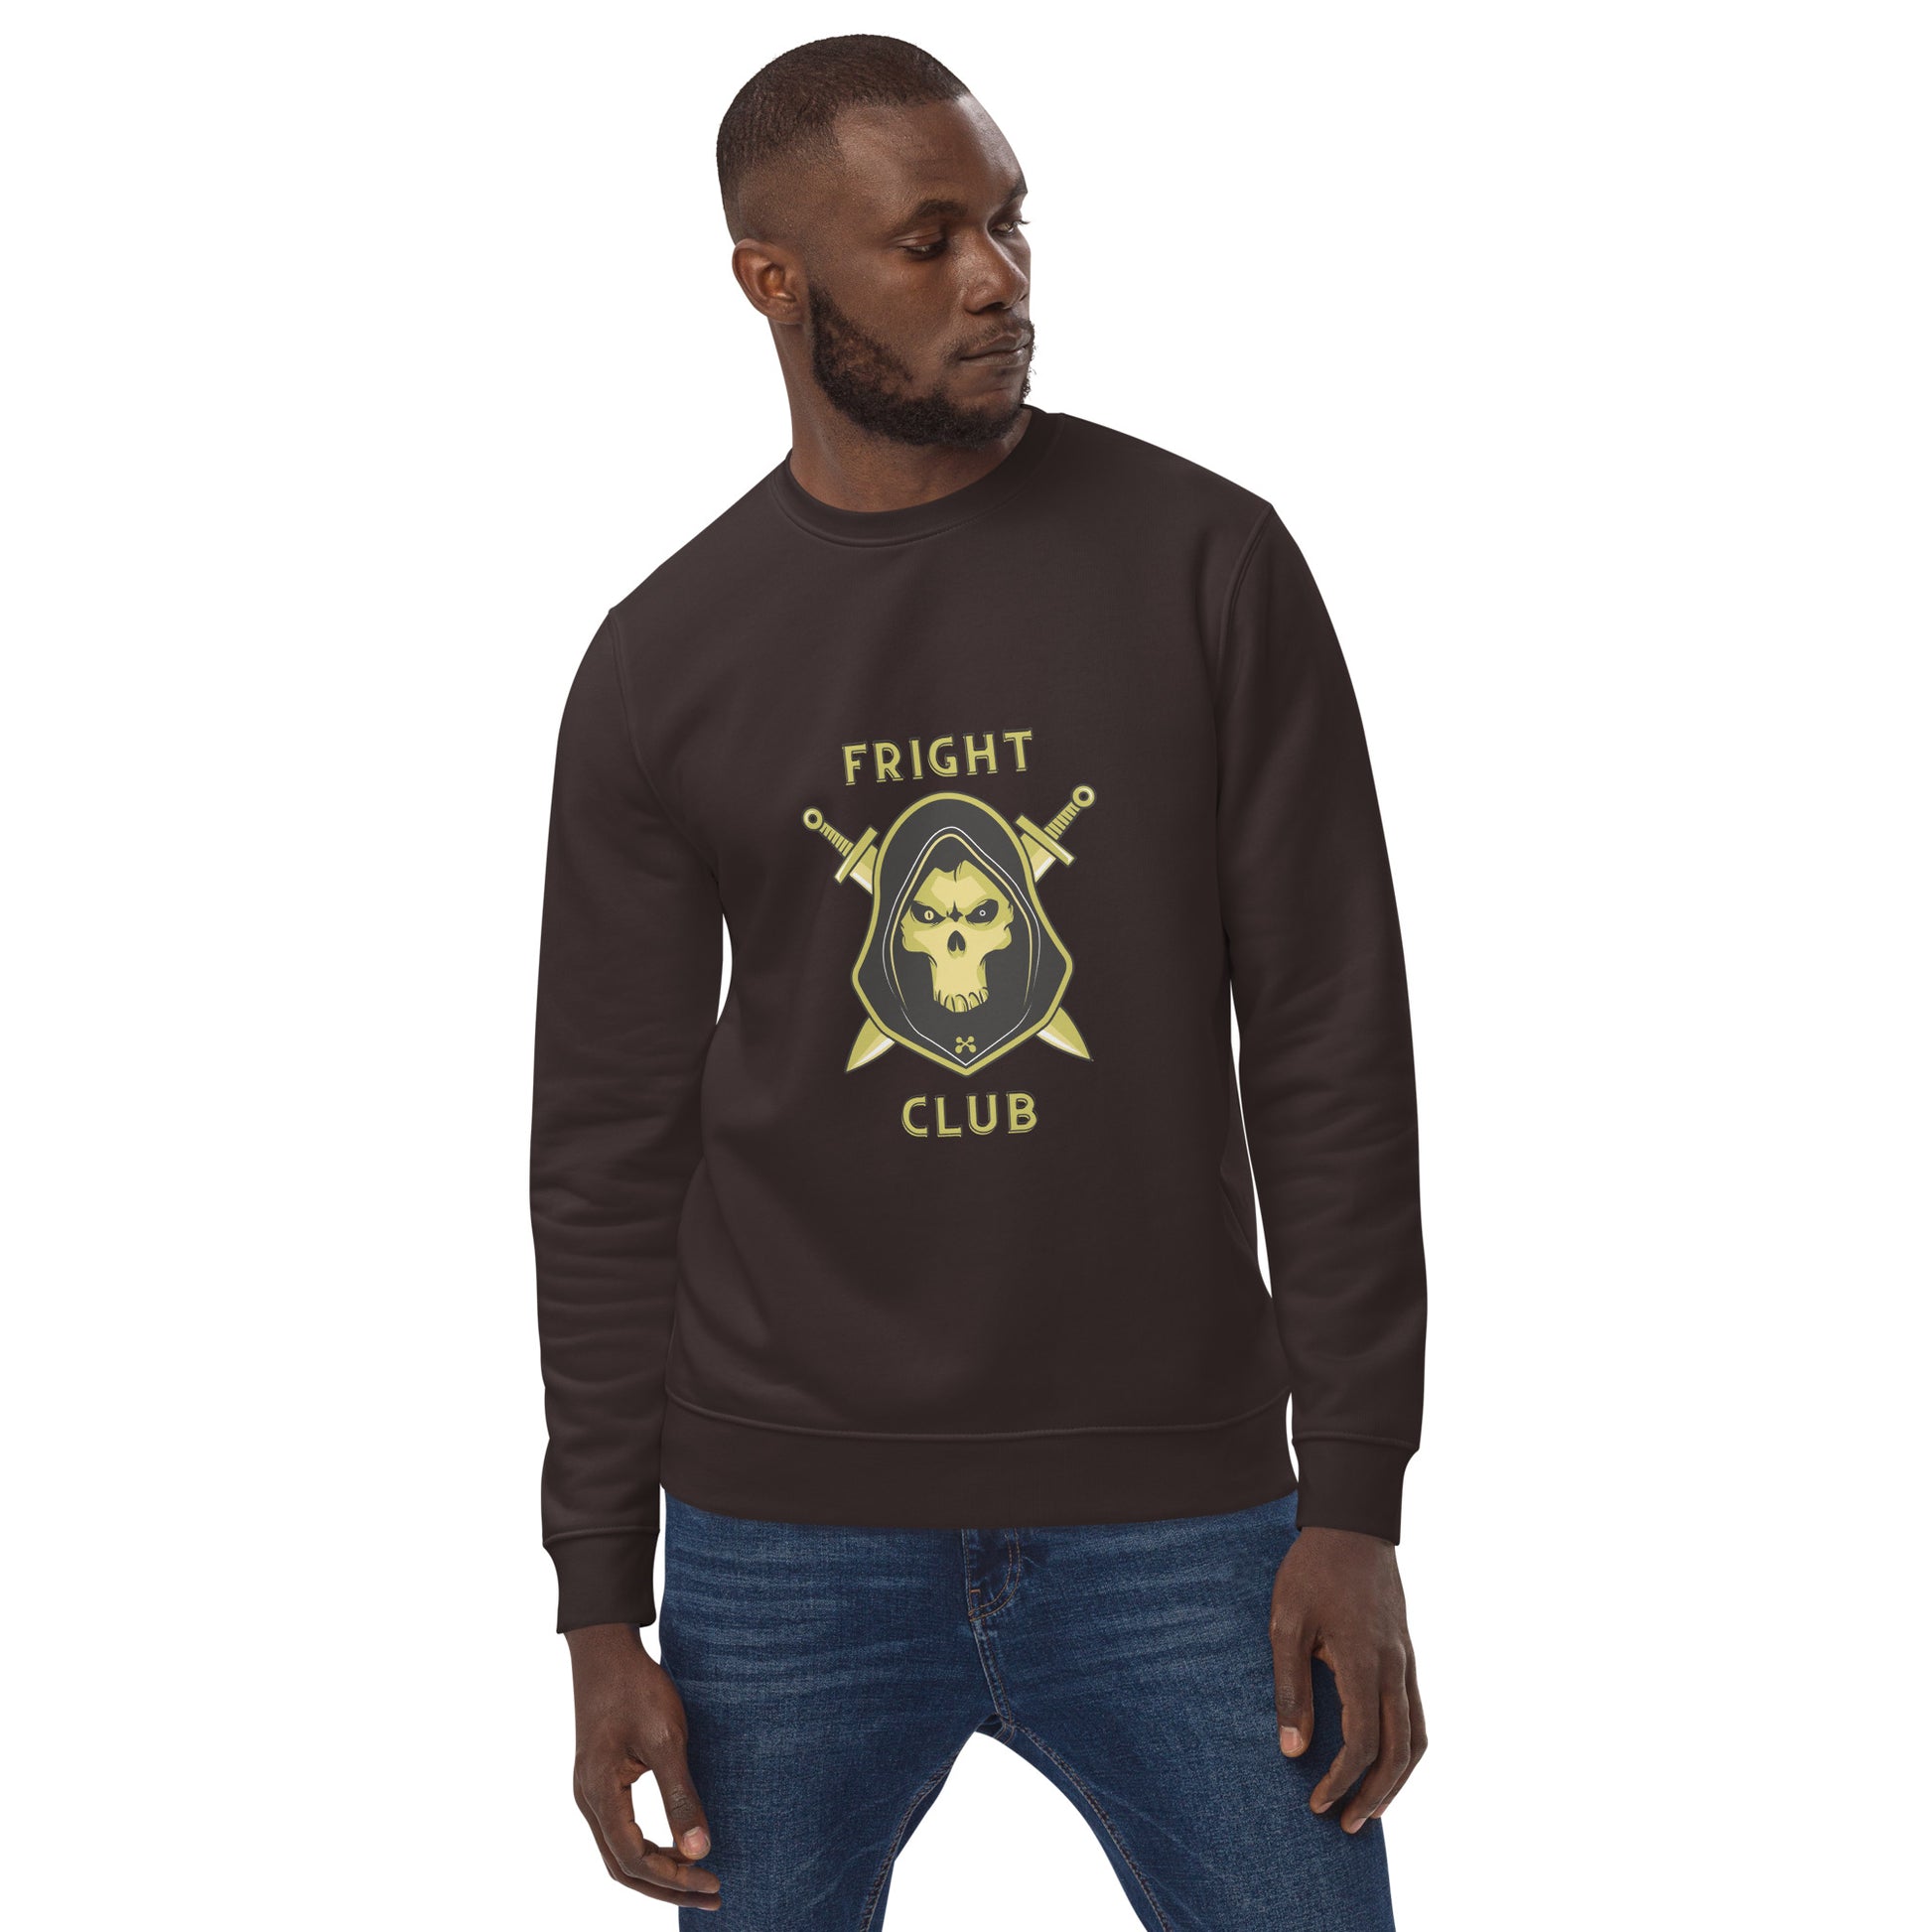 Fright Club Unisex eco sweatshirt - A. Mandaline Art